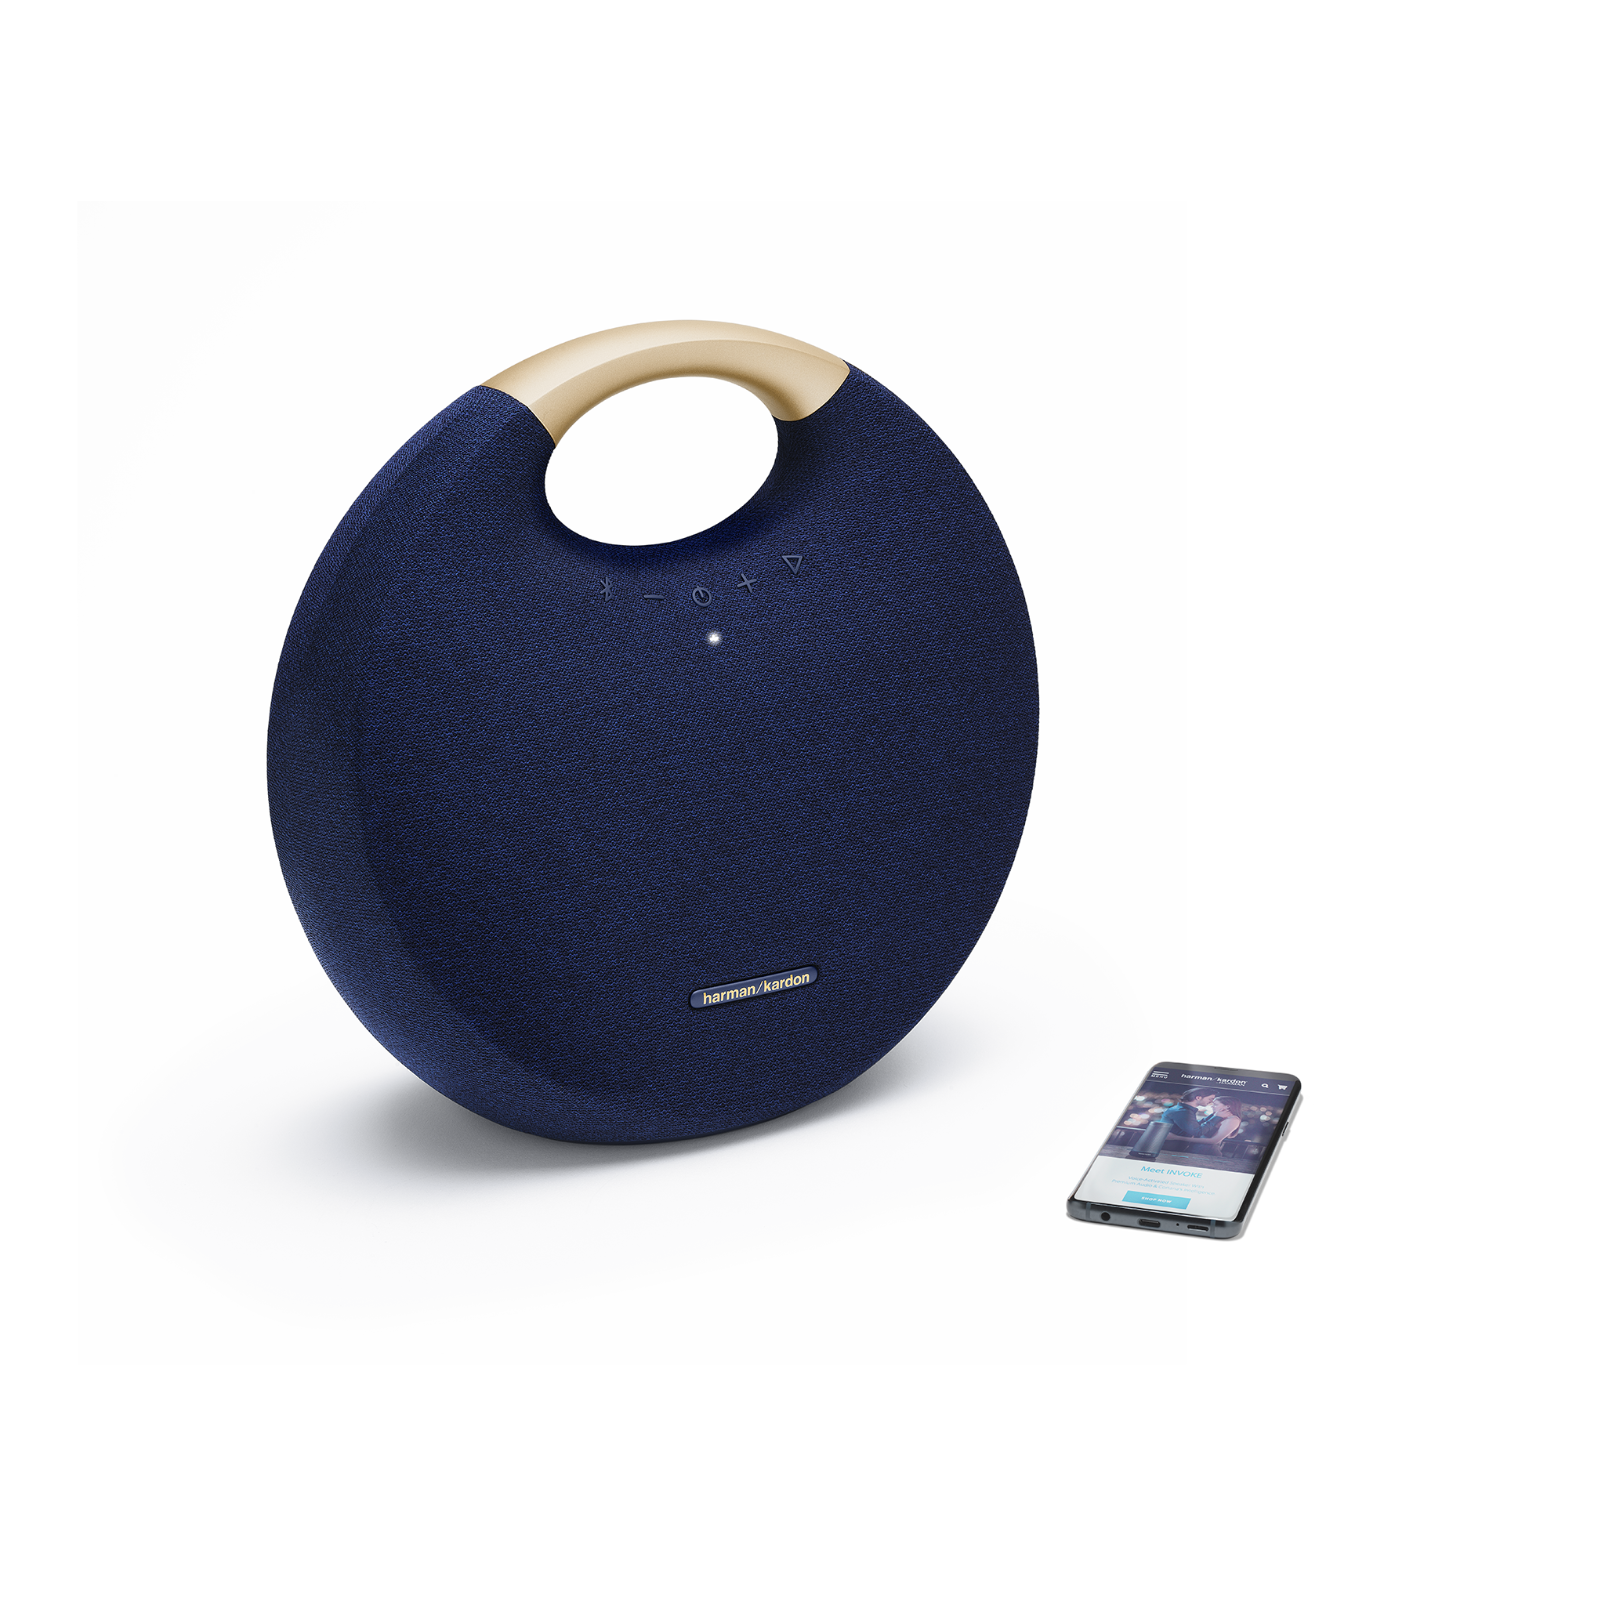 Harman Kardon Onyx Studio 6 Portable Wireless Bluetooth Speaker